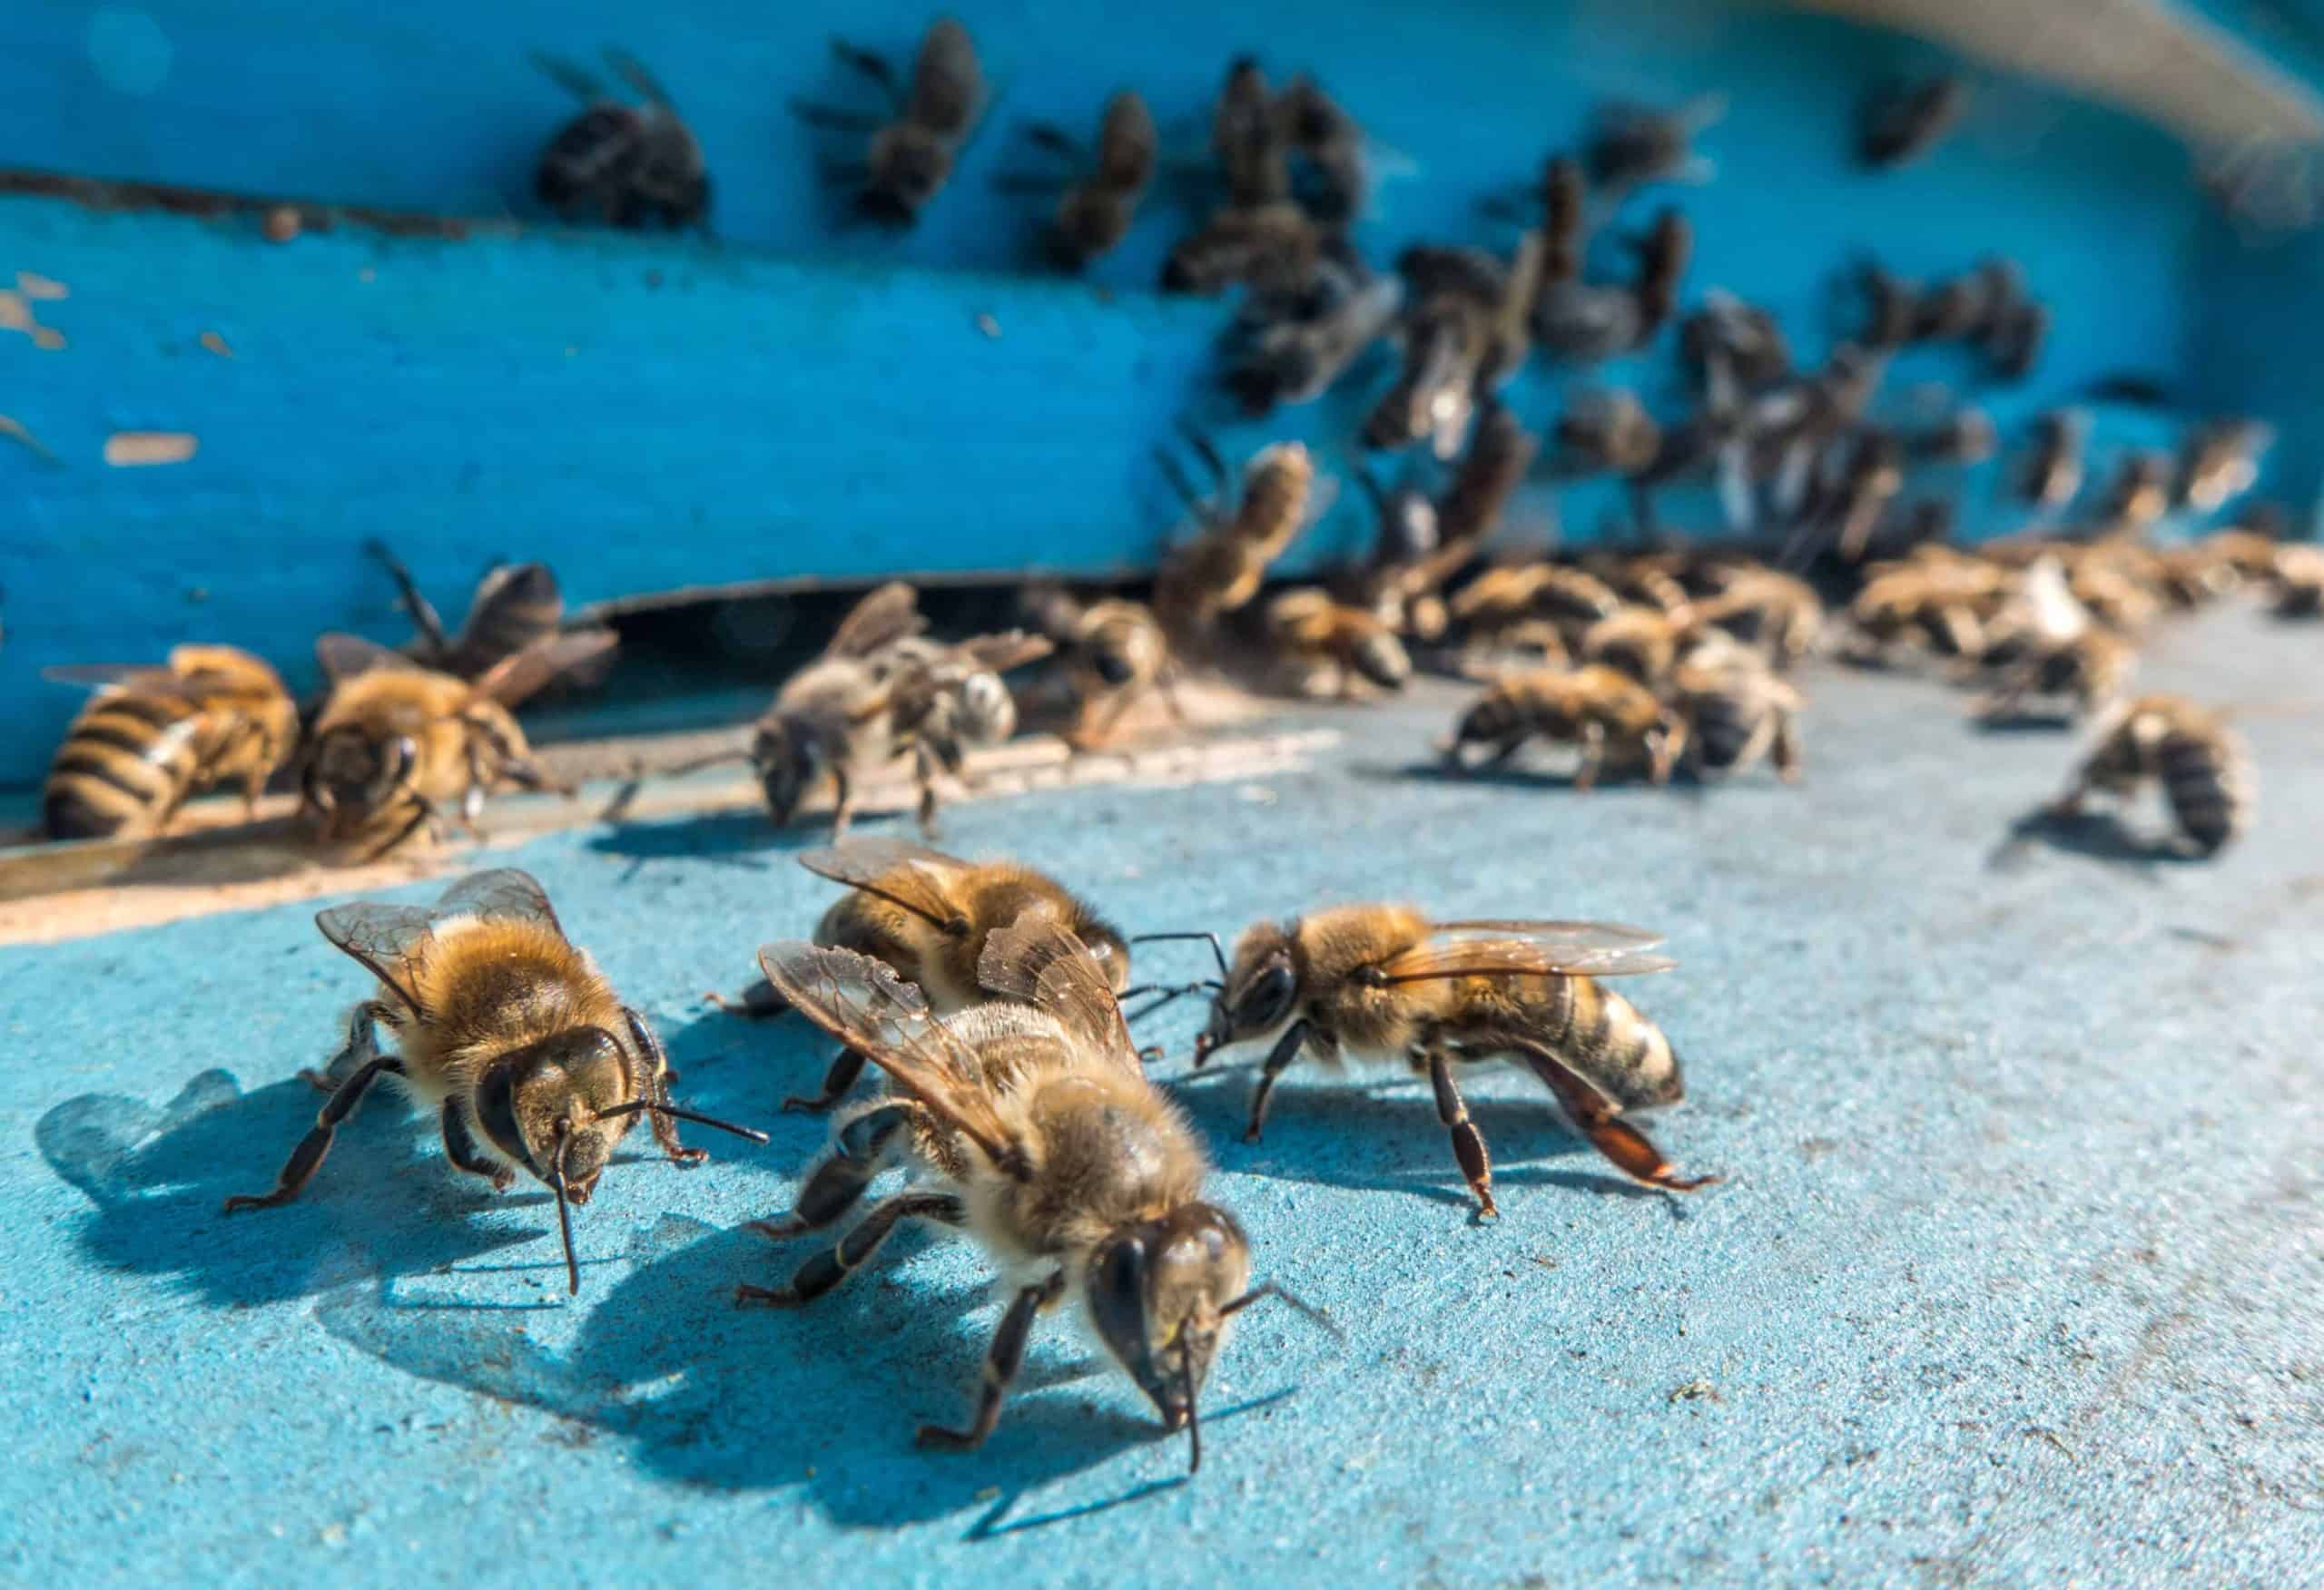 Bees at entrance to hive